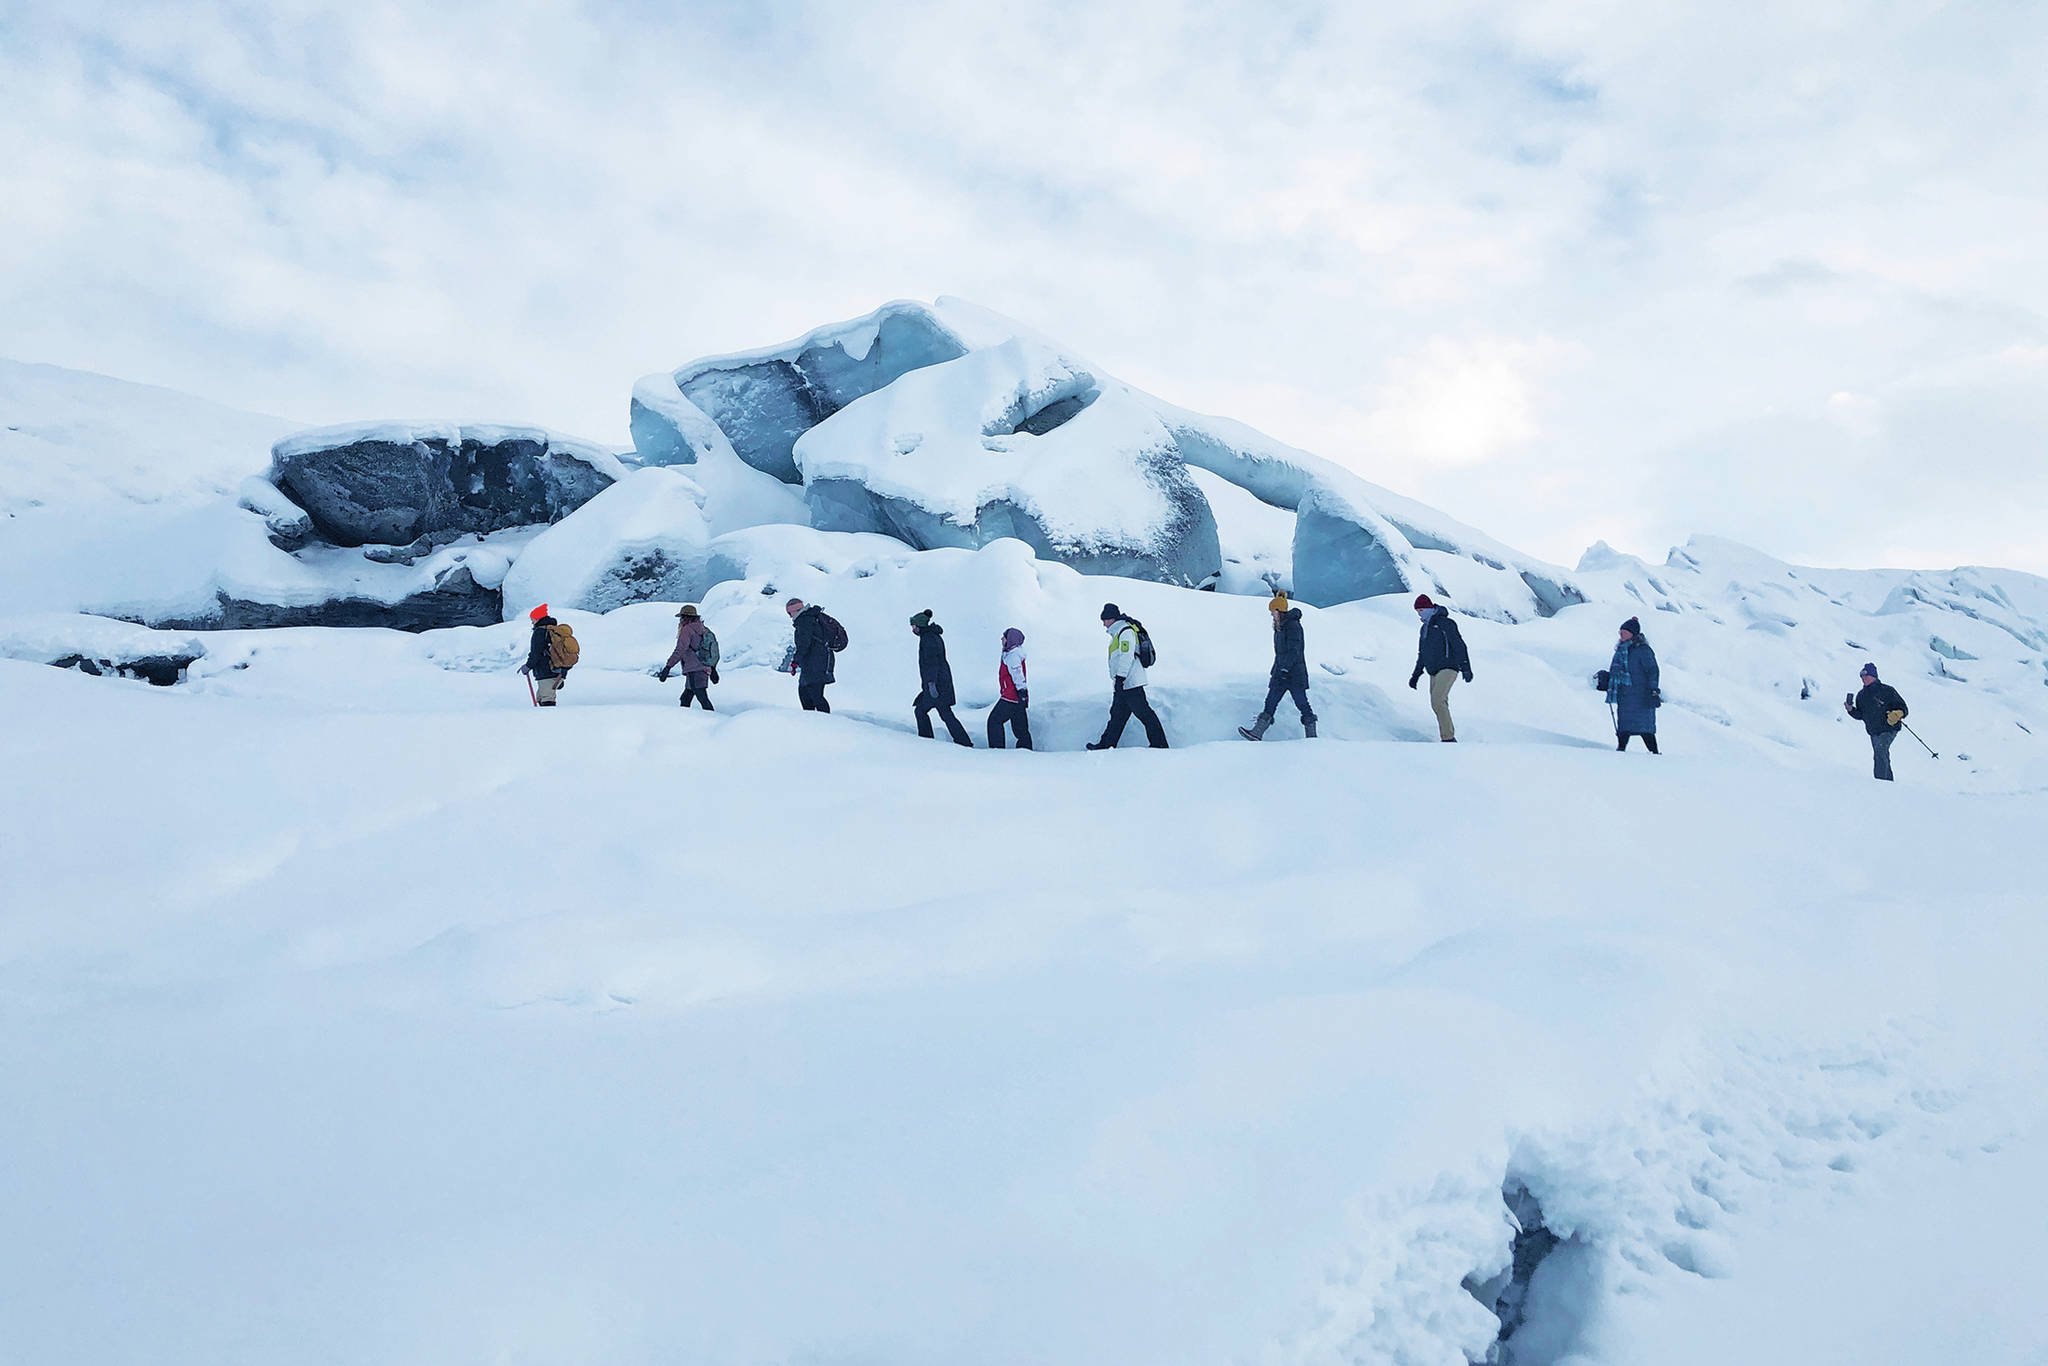 A group of explorers led by a guide tour the Matanuska Glacier on Jan. 17, 2021 in the Matanuska-Susitna Borough, Alaska. (Photo by Megan Pacer/Homer News)